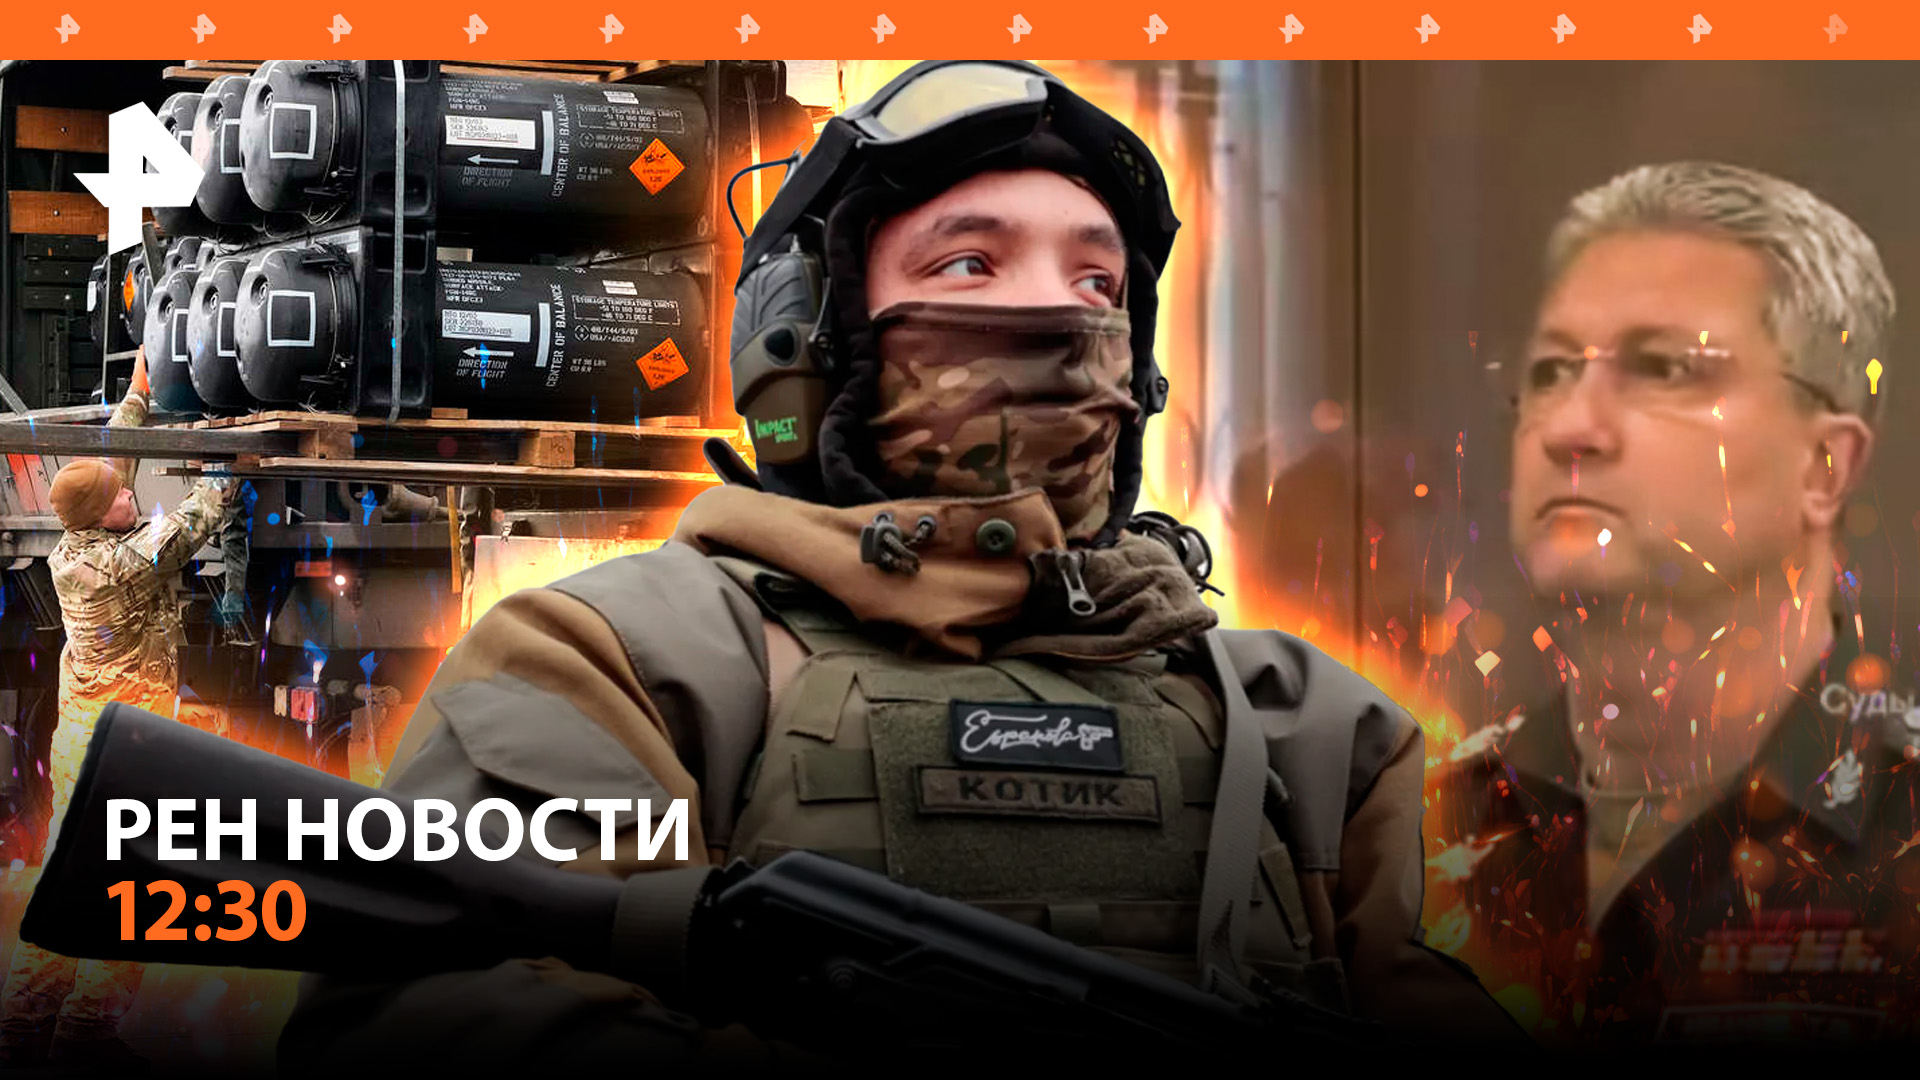 Замминистра обороны Иванов за решеткой / Сенат США одобрил транш Киеву / РЕН Новости 24.04, 12:30